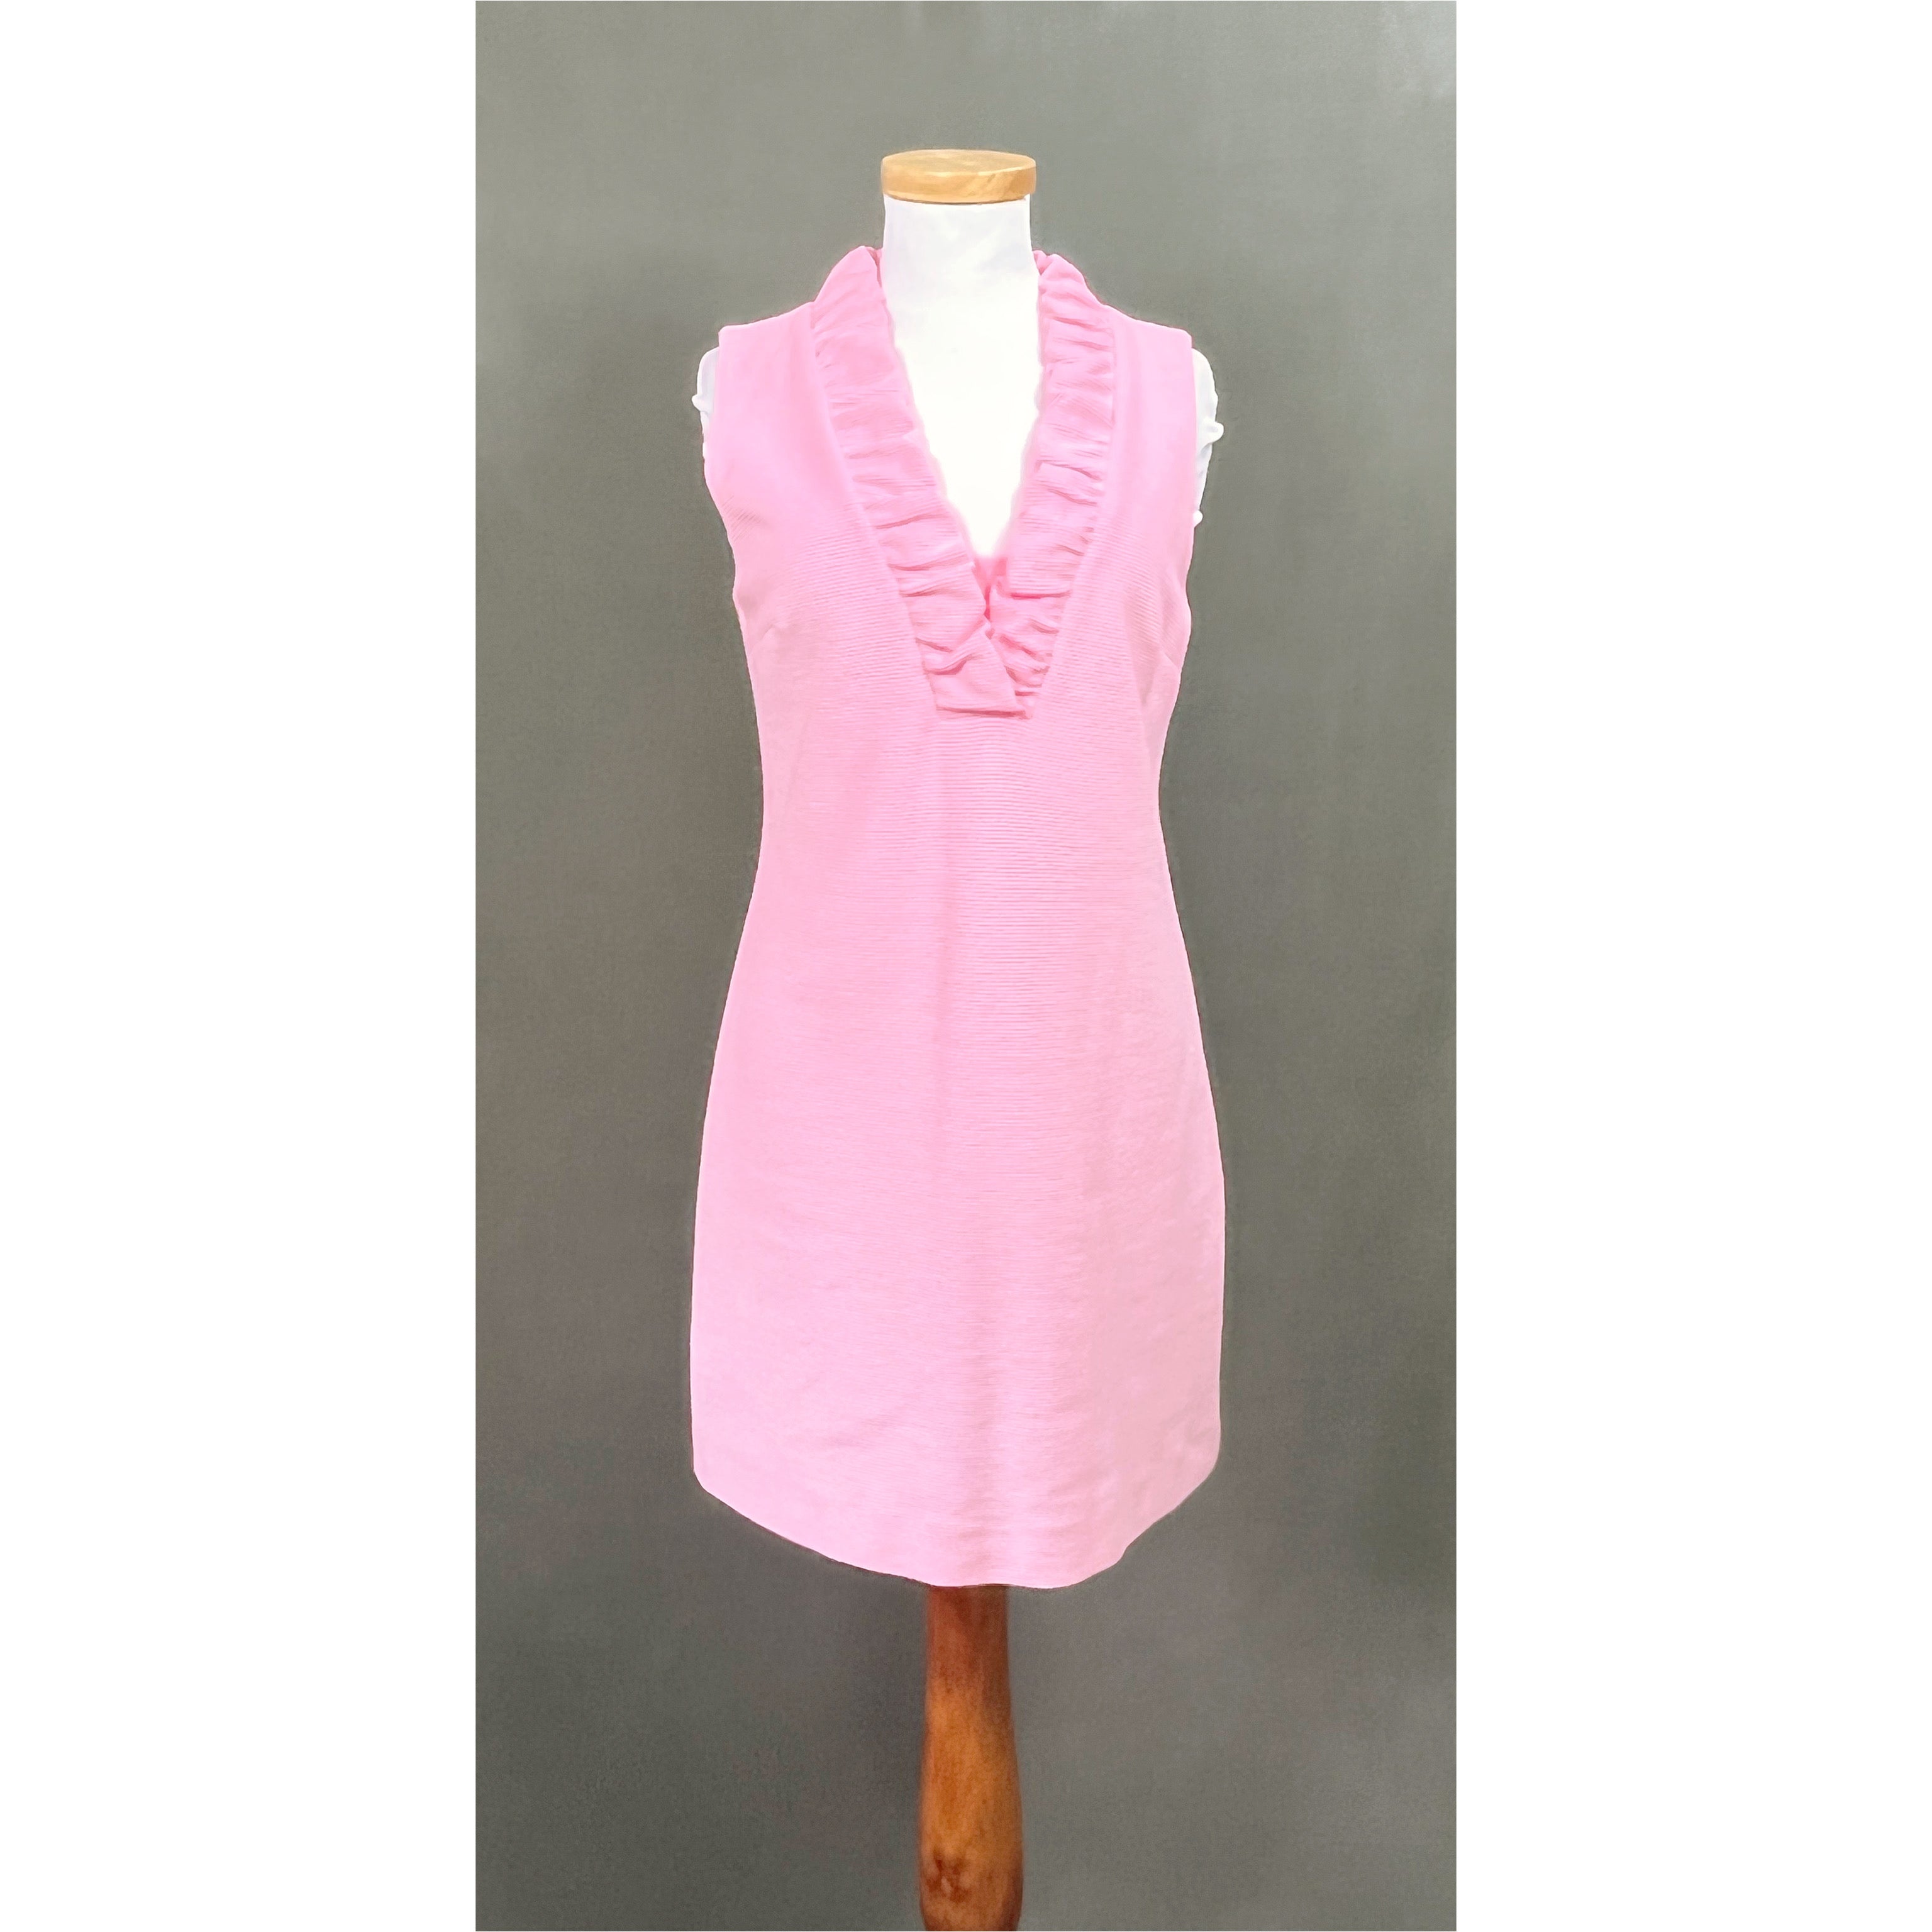 Lilly Pulitzer pink stripe Tisbury Shift dress, size M